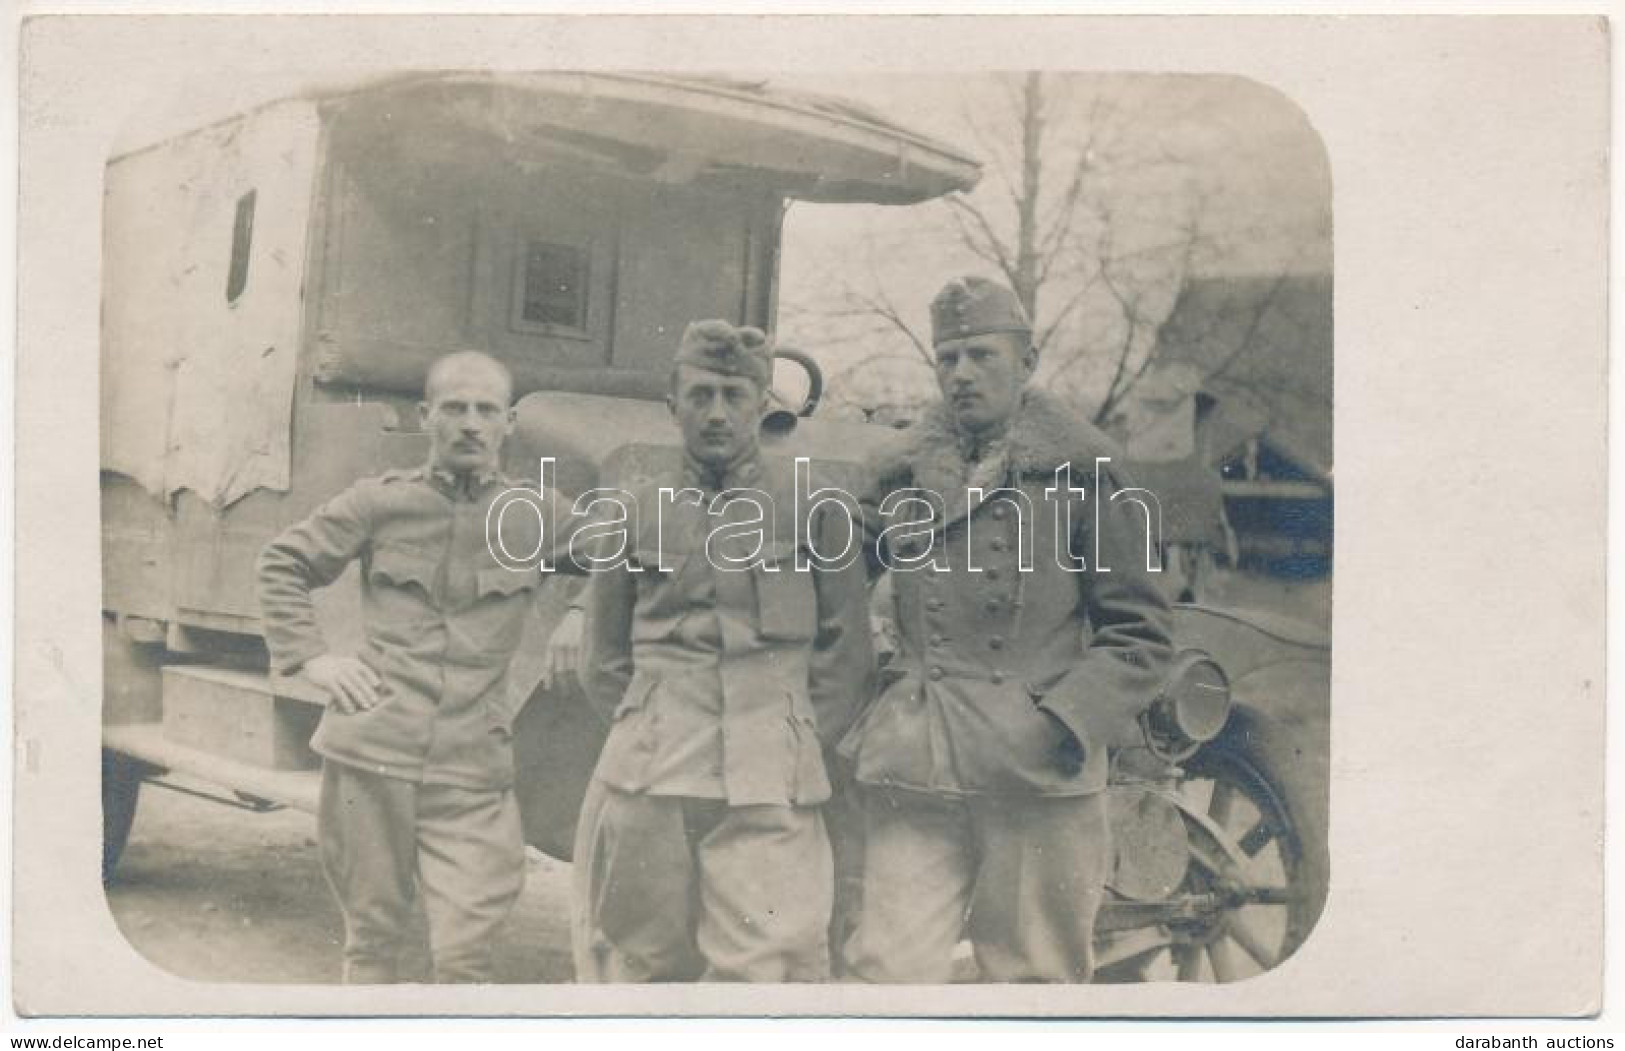 * T2 1918 Radauti, Radóc, Radautz (Bukovina, Bukowina); Osztrák-magyar Katonák Katonai Teherautó Előtt / WWI K.u.k. Sold - Unclassified